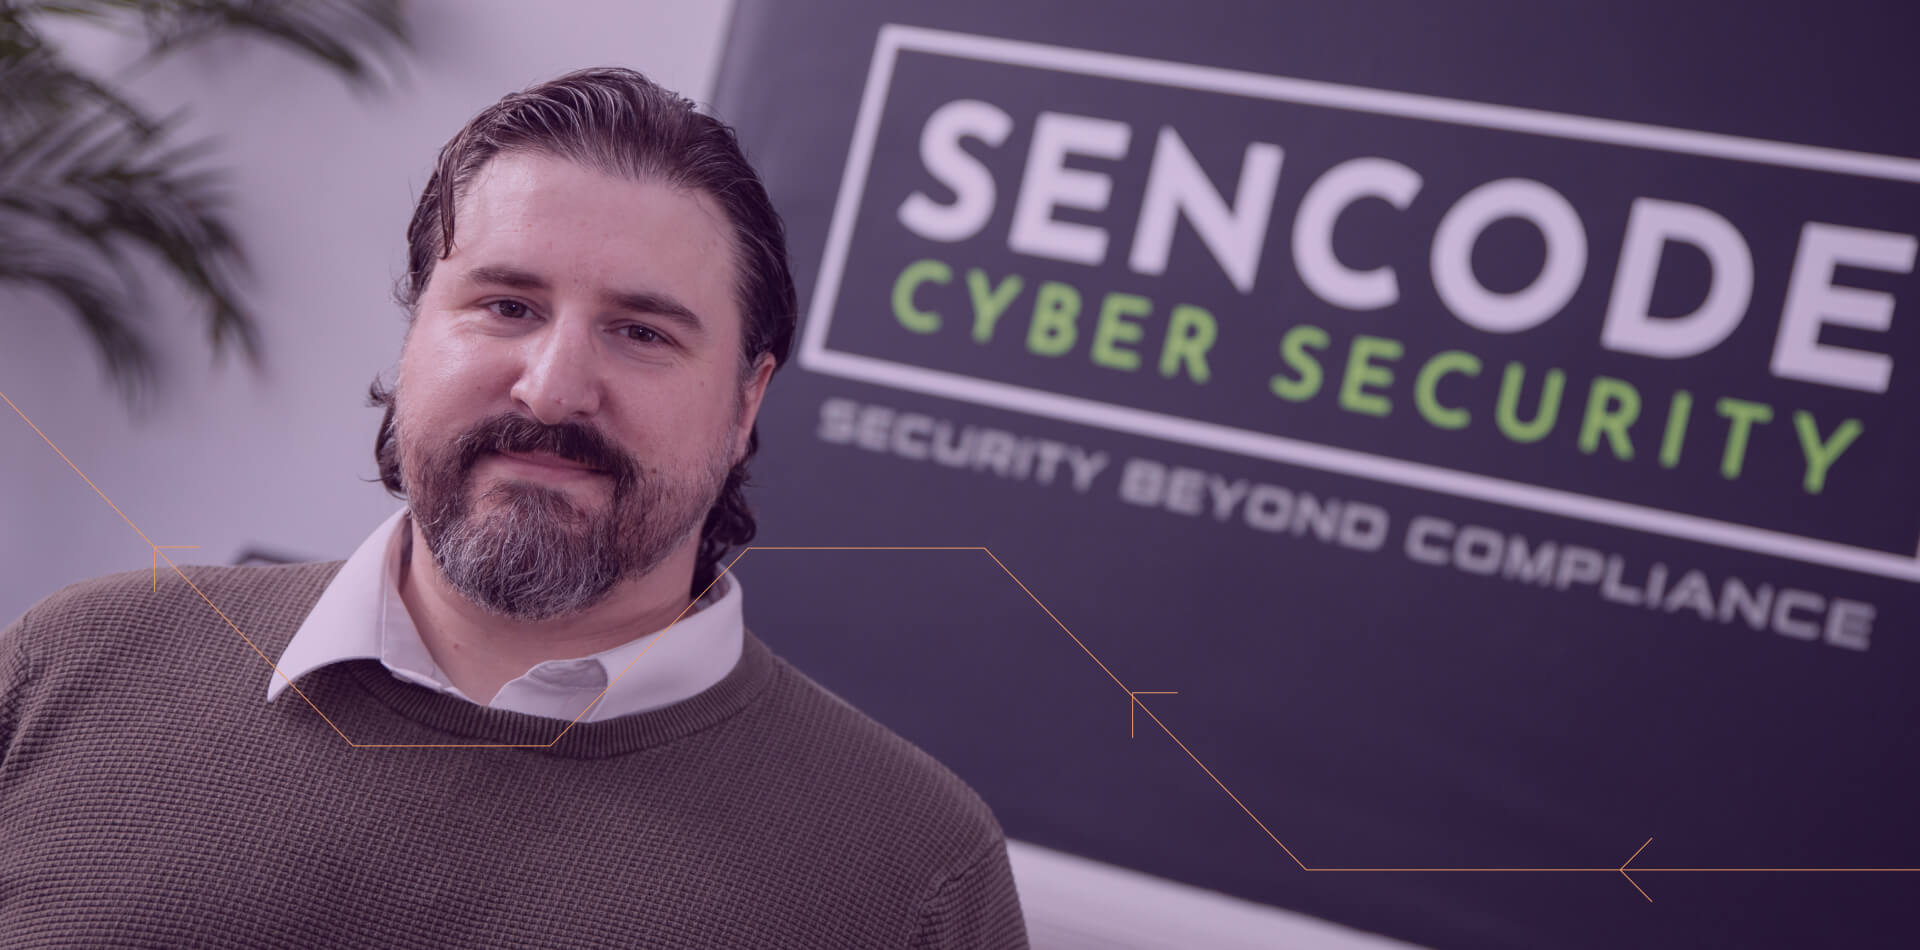 Matthew Protheroe-Hill, Managing Director, Sencode Cyber Security